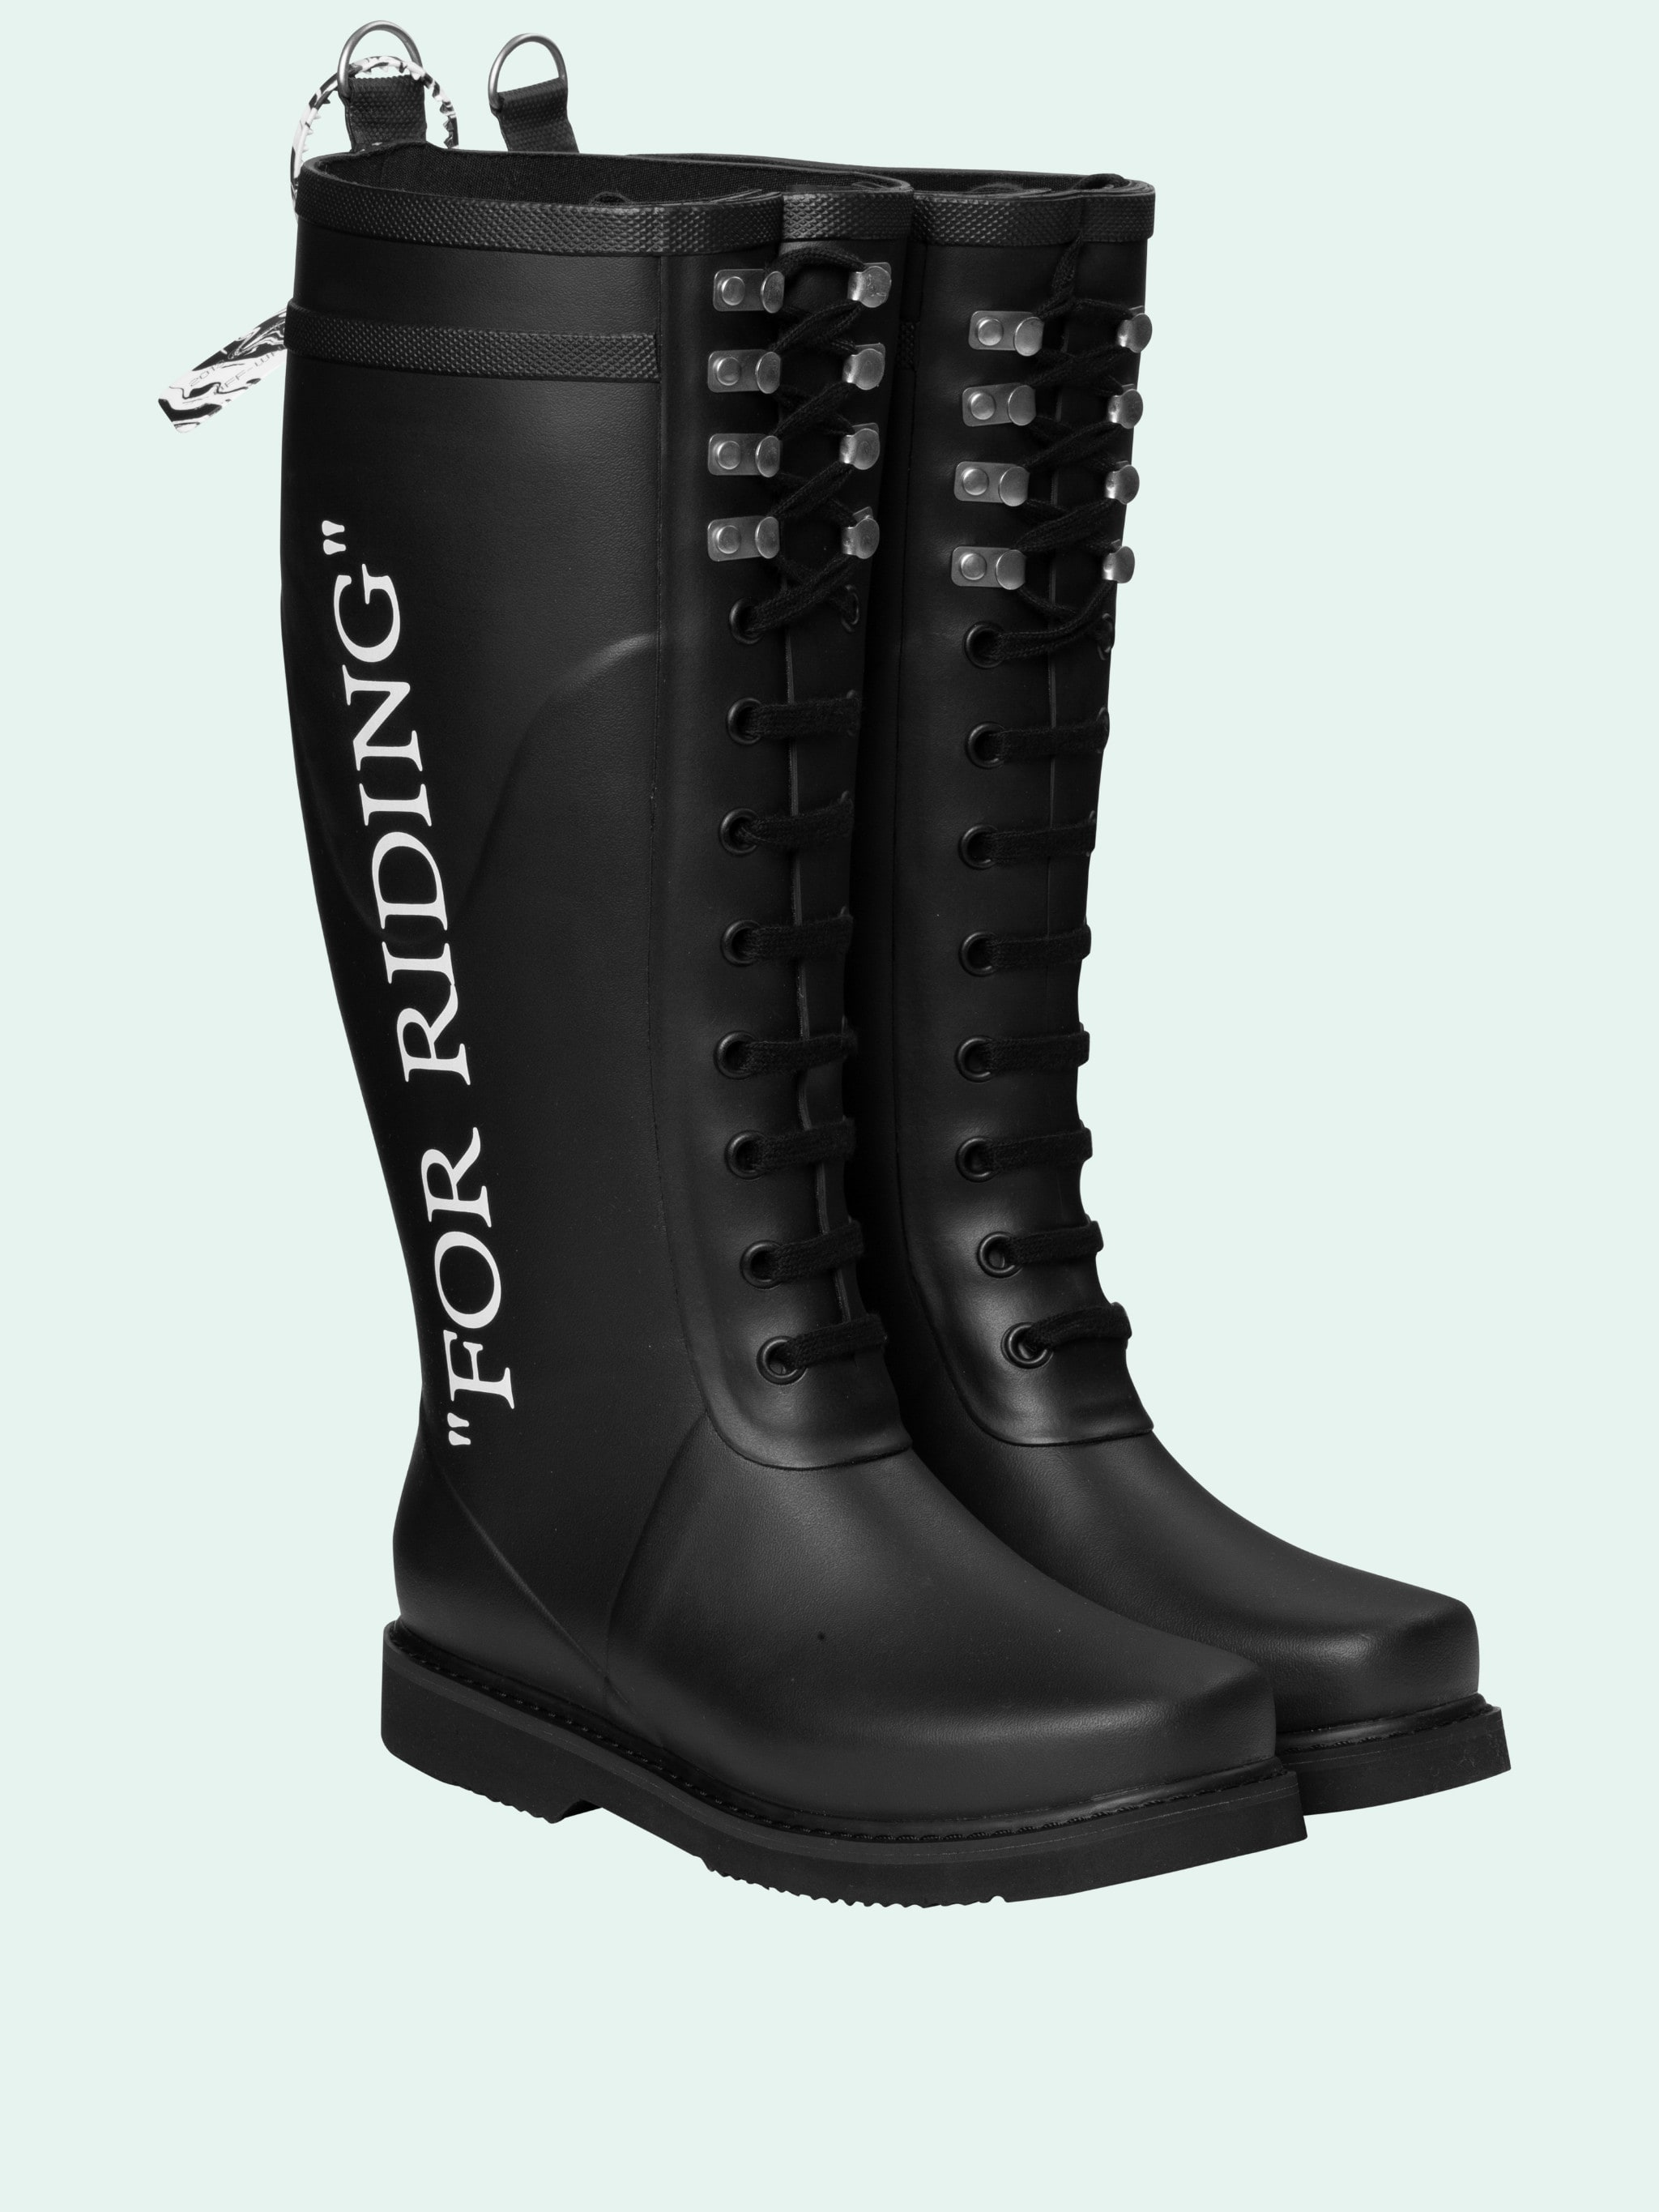 Monogrammed Black rain boots with bows Rubber rain boots Schoenen damesschoenen Laarzen Regen- & Sneeuwlaarzen Boots Mud Boots Personalized Mud Boots Rain Boots 